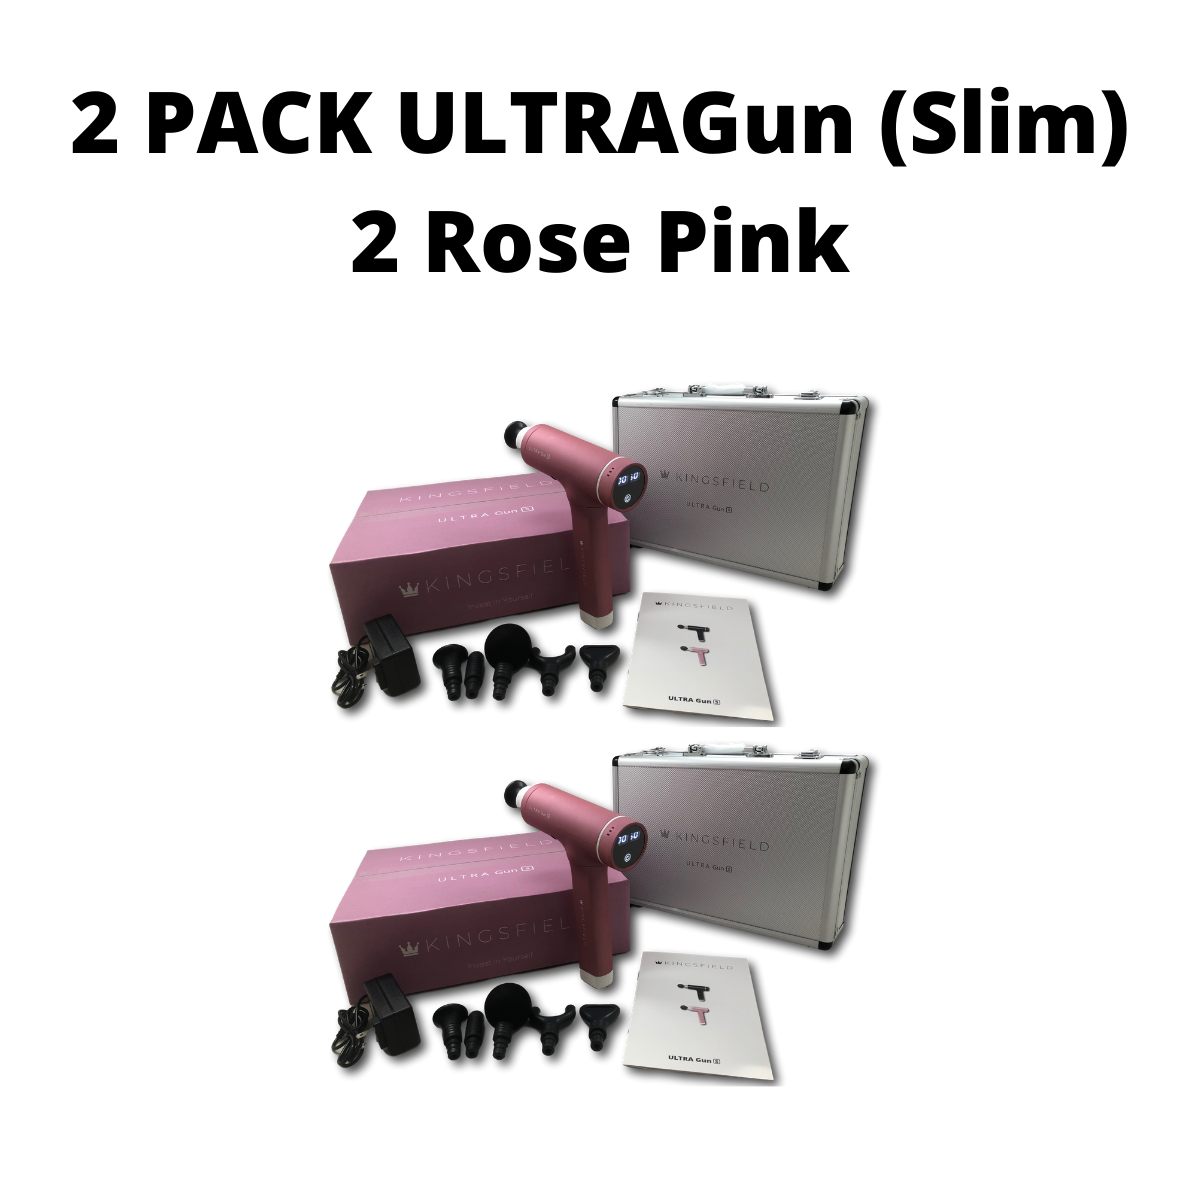 2 Pack ULTRAGun (Slim)